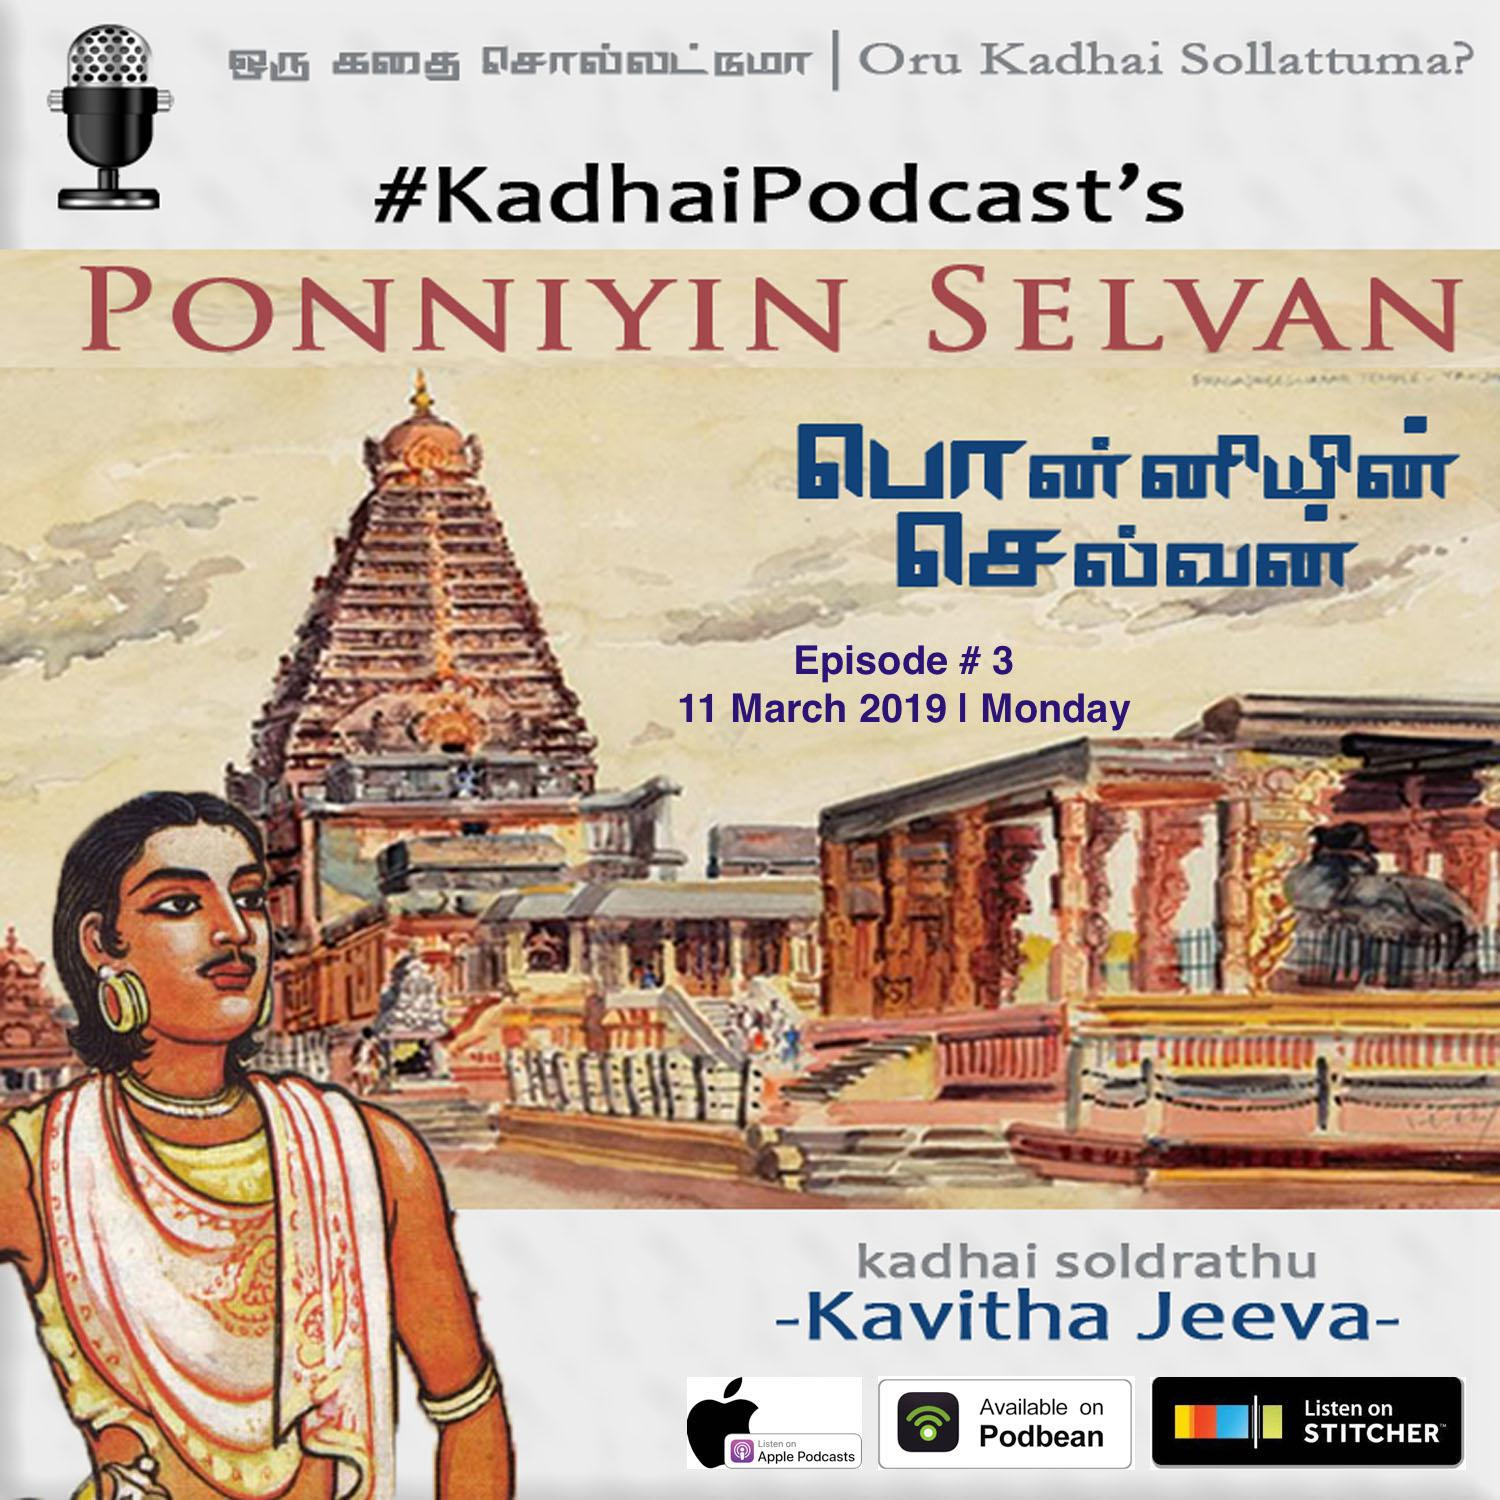 KadhaiPodcast's Ponniyin Selvan - Episode # 3